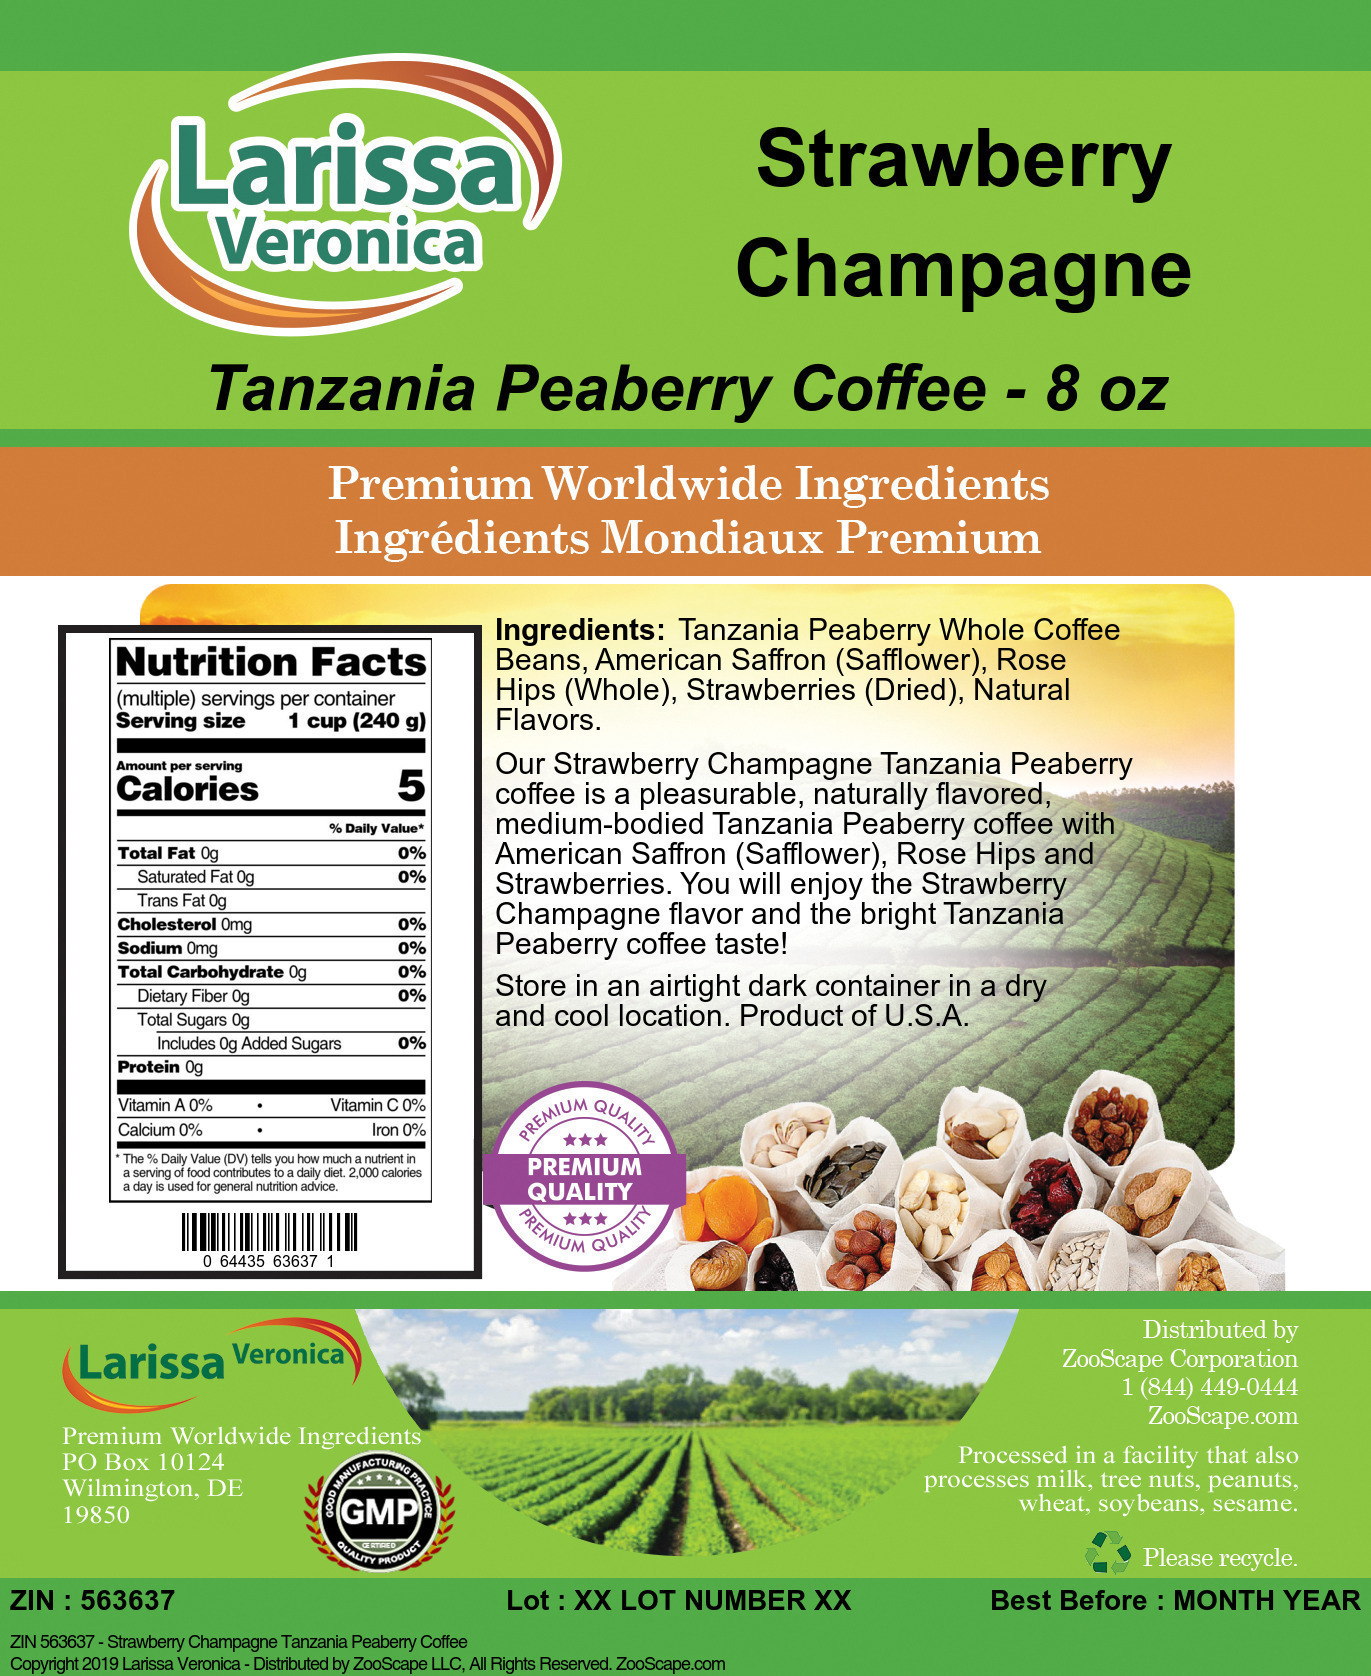 Strawberry Champagne Tanzania Peaberry Coffee - Label